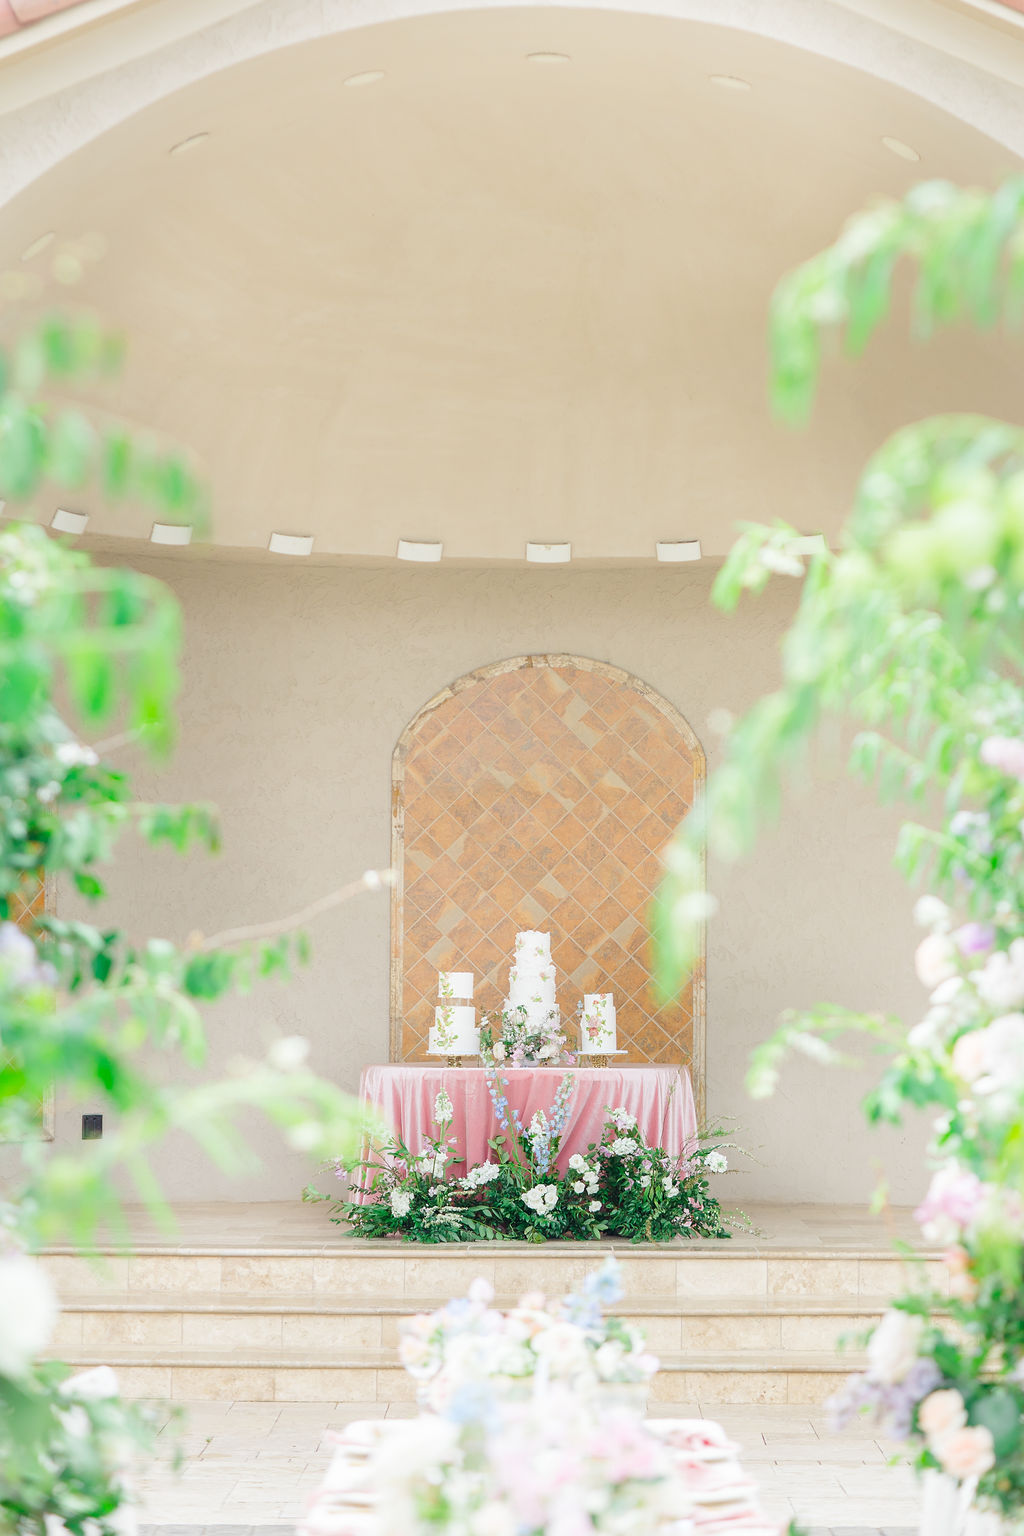 Three pastel wedding cakes on pink stand 